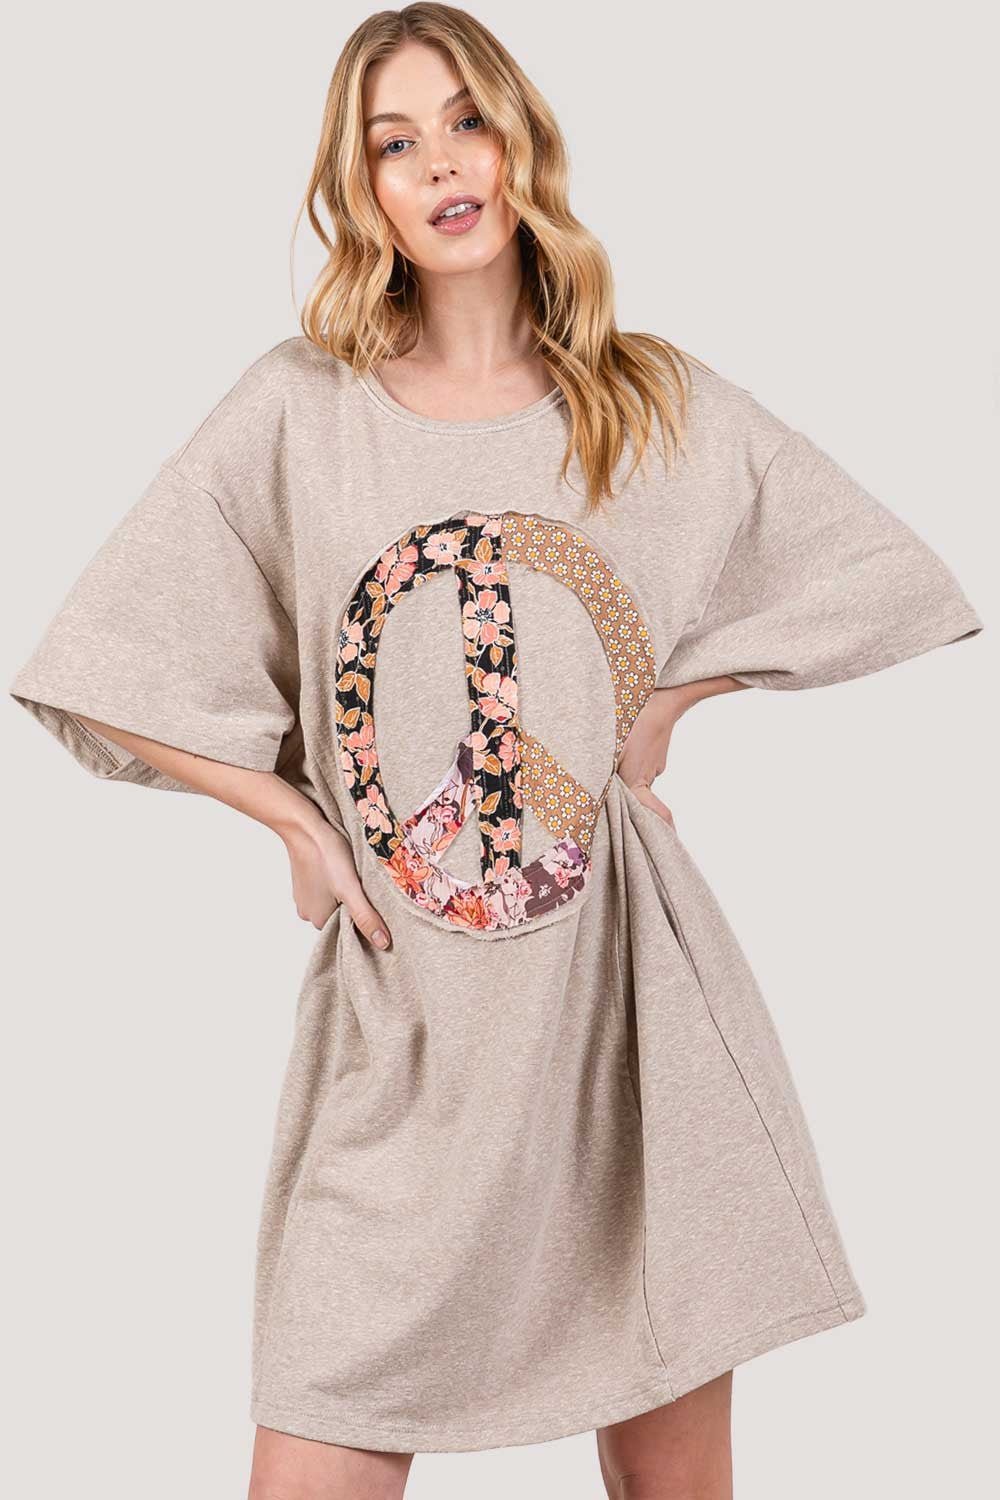 Peace Sign Applique Short Sleeve Mini Tee Dress in OatmealMini DressSAGE+FIG